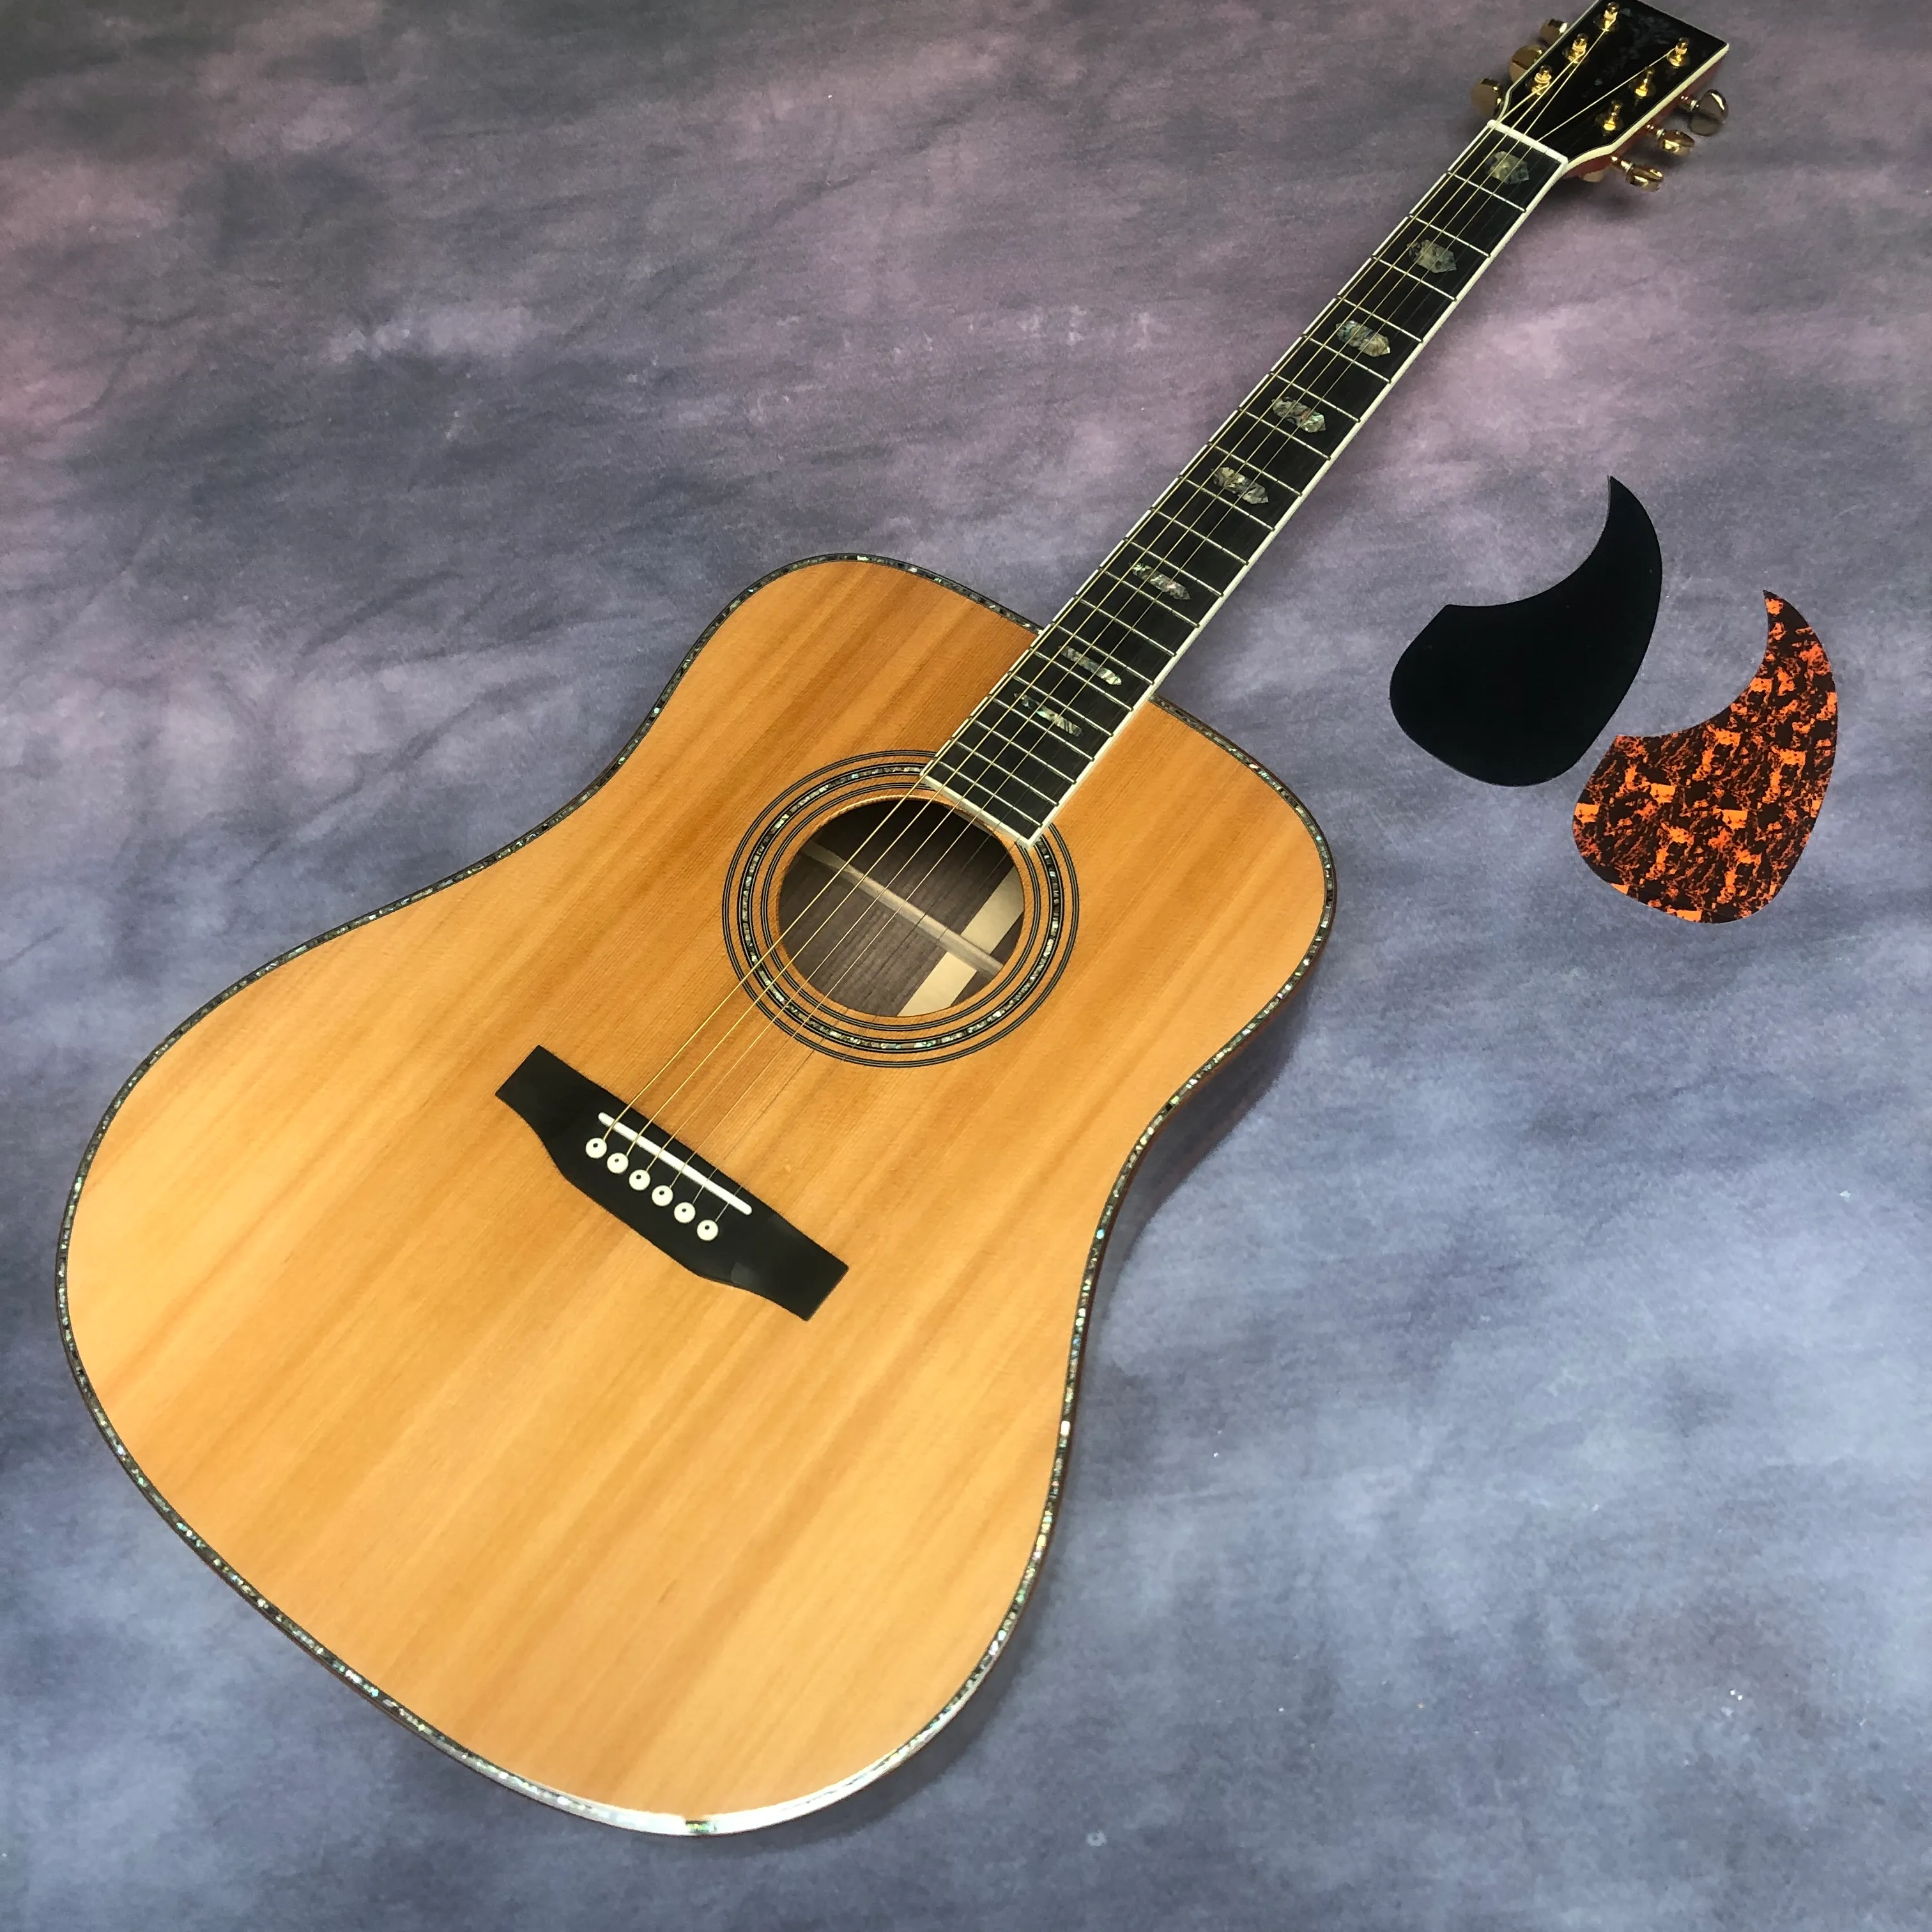 41 "D Barrel Solid Wood Section Woodsfinger D45 Series Acoustic Acoustic Guitar